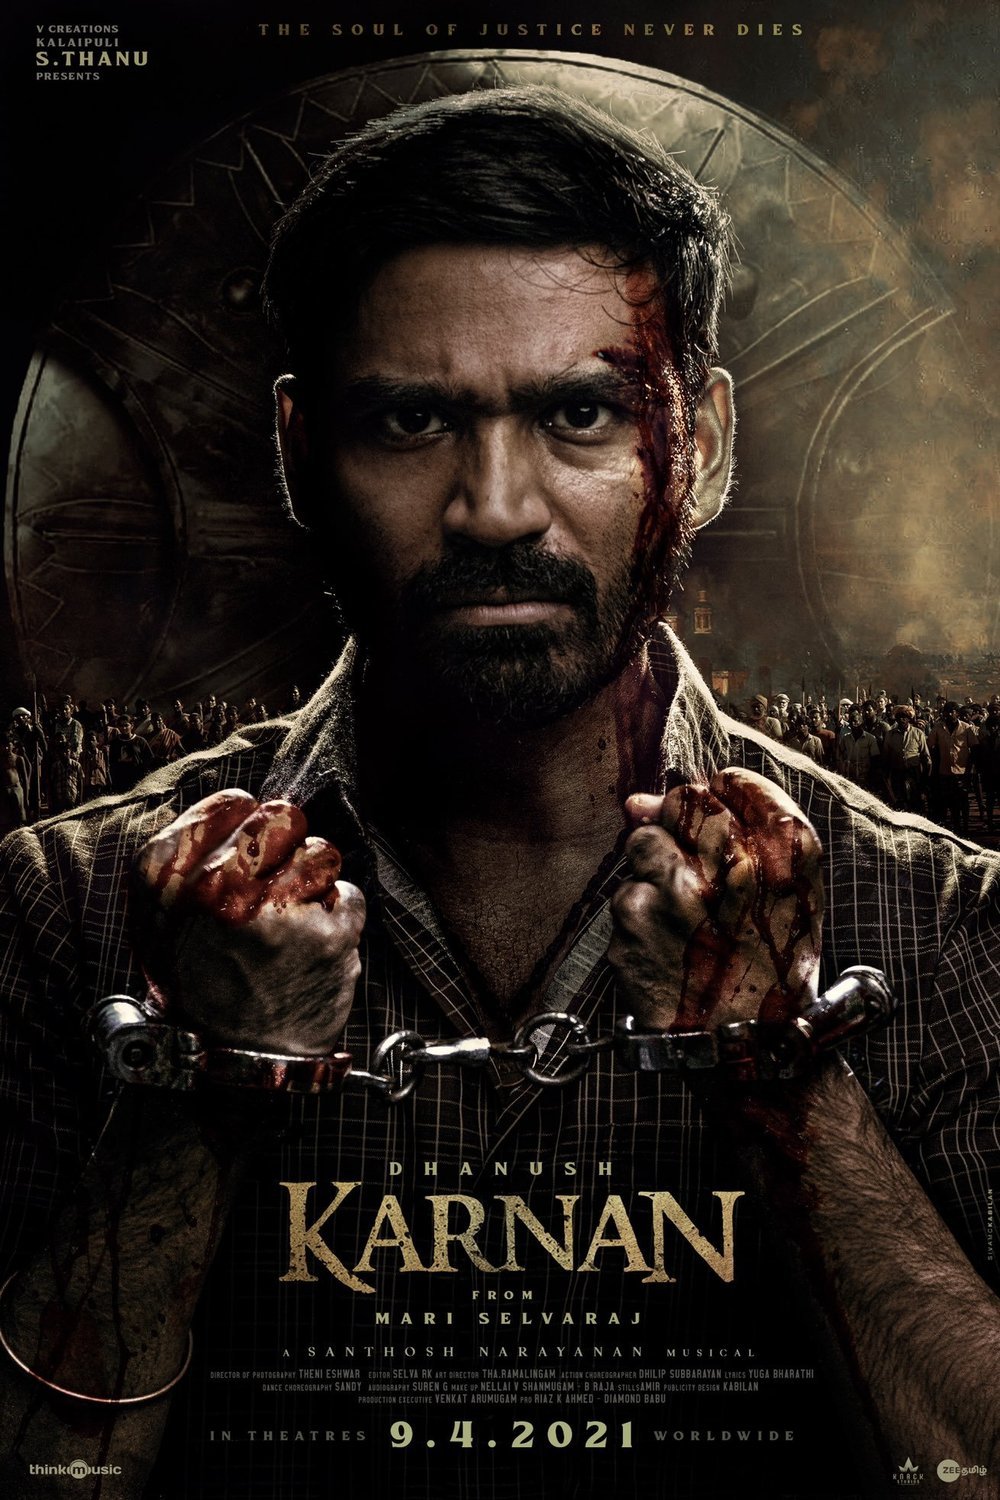 Tamil poster of the movie Karnan